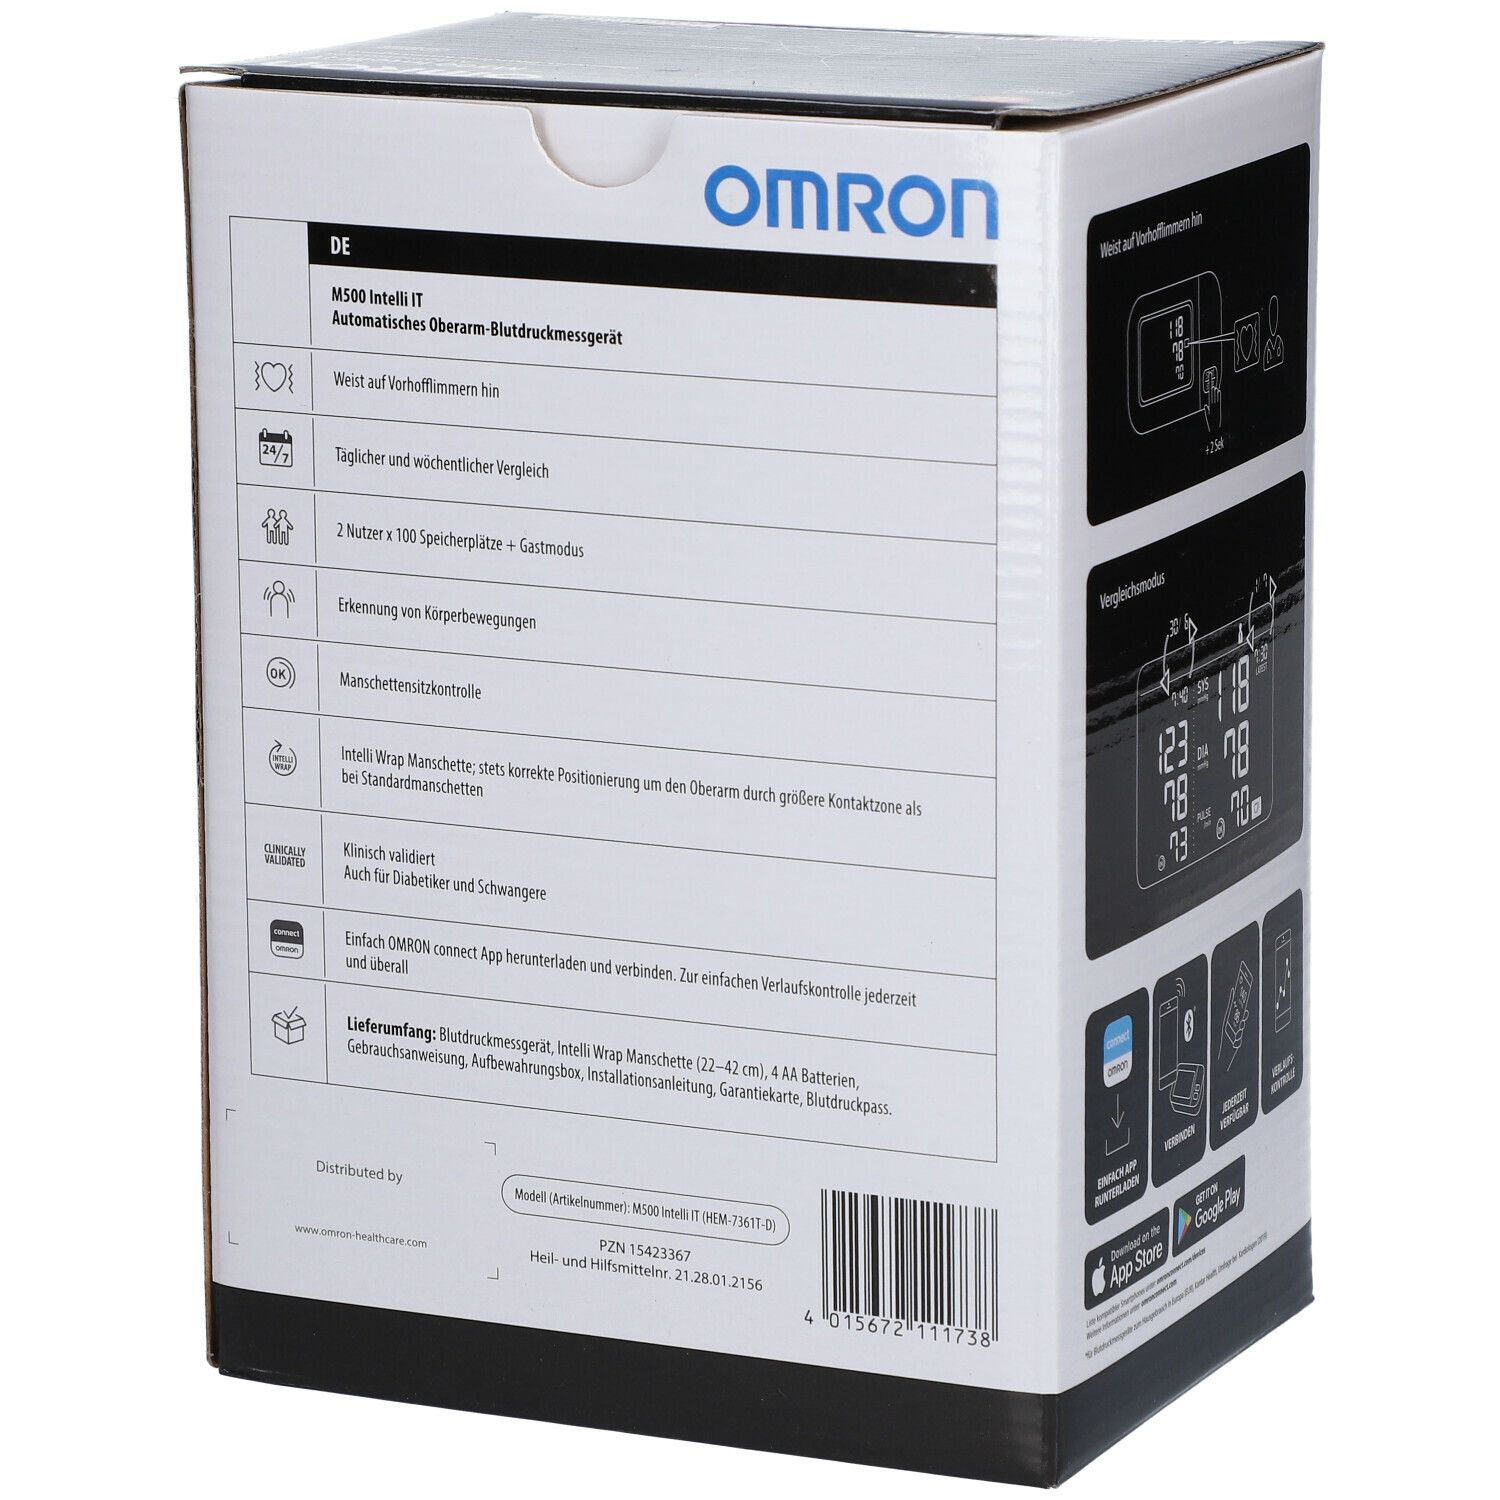 OMRON M500 Intelli IT